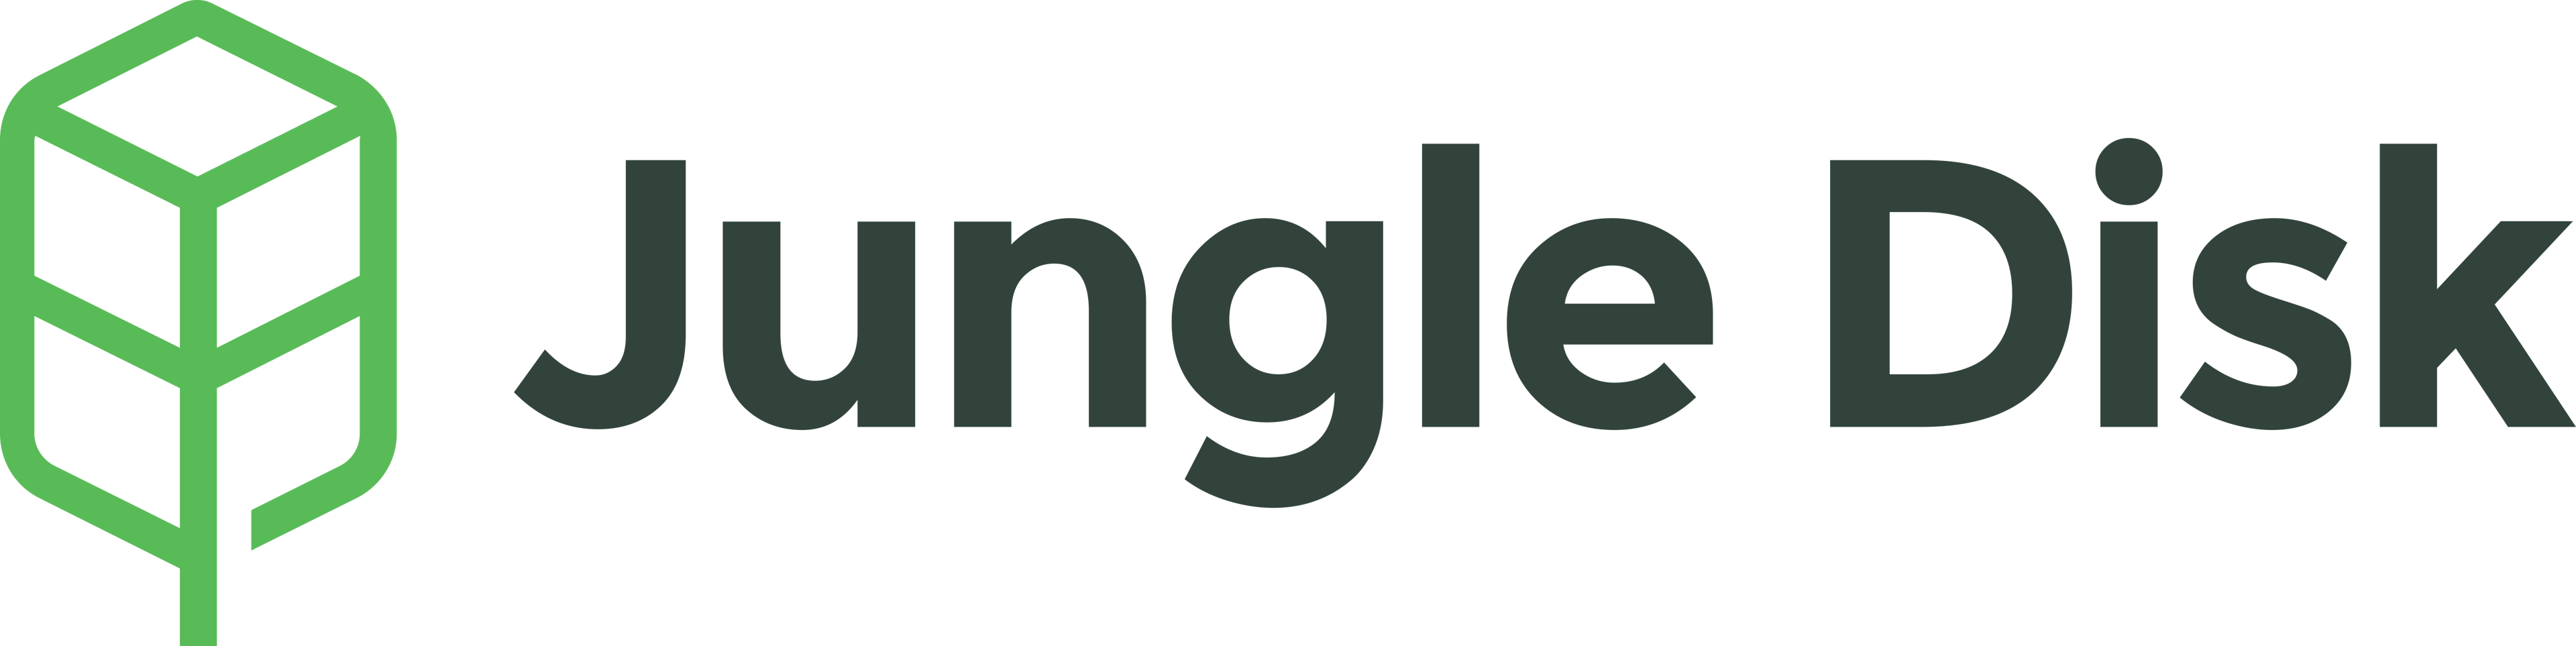 Jungle disk logo